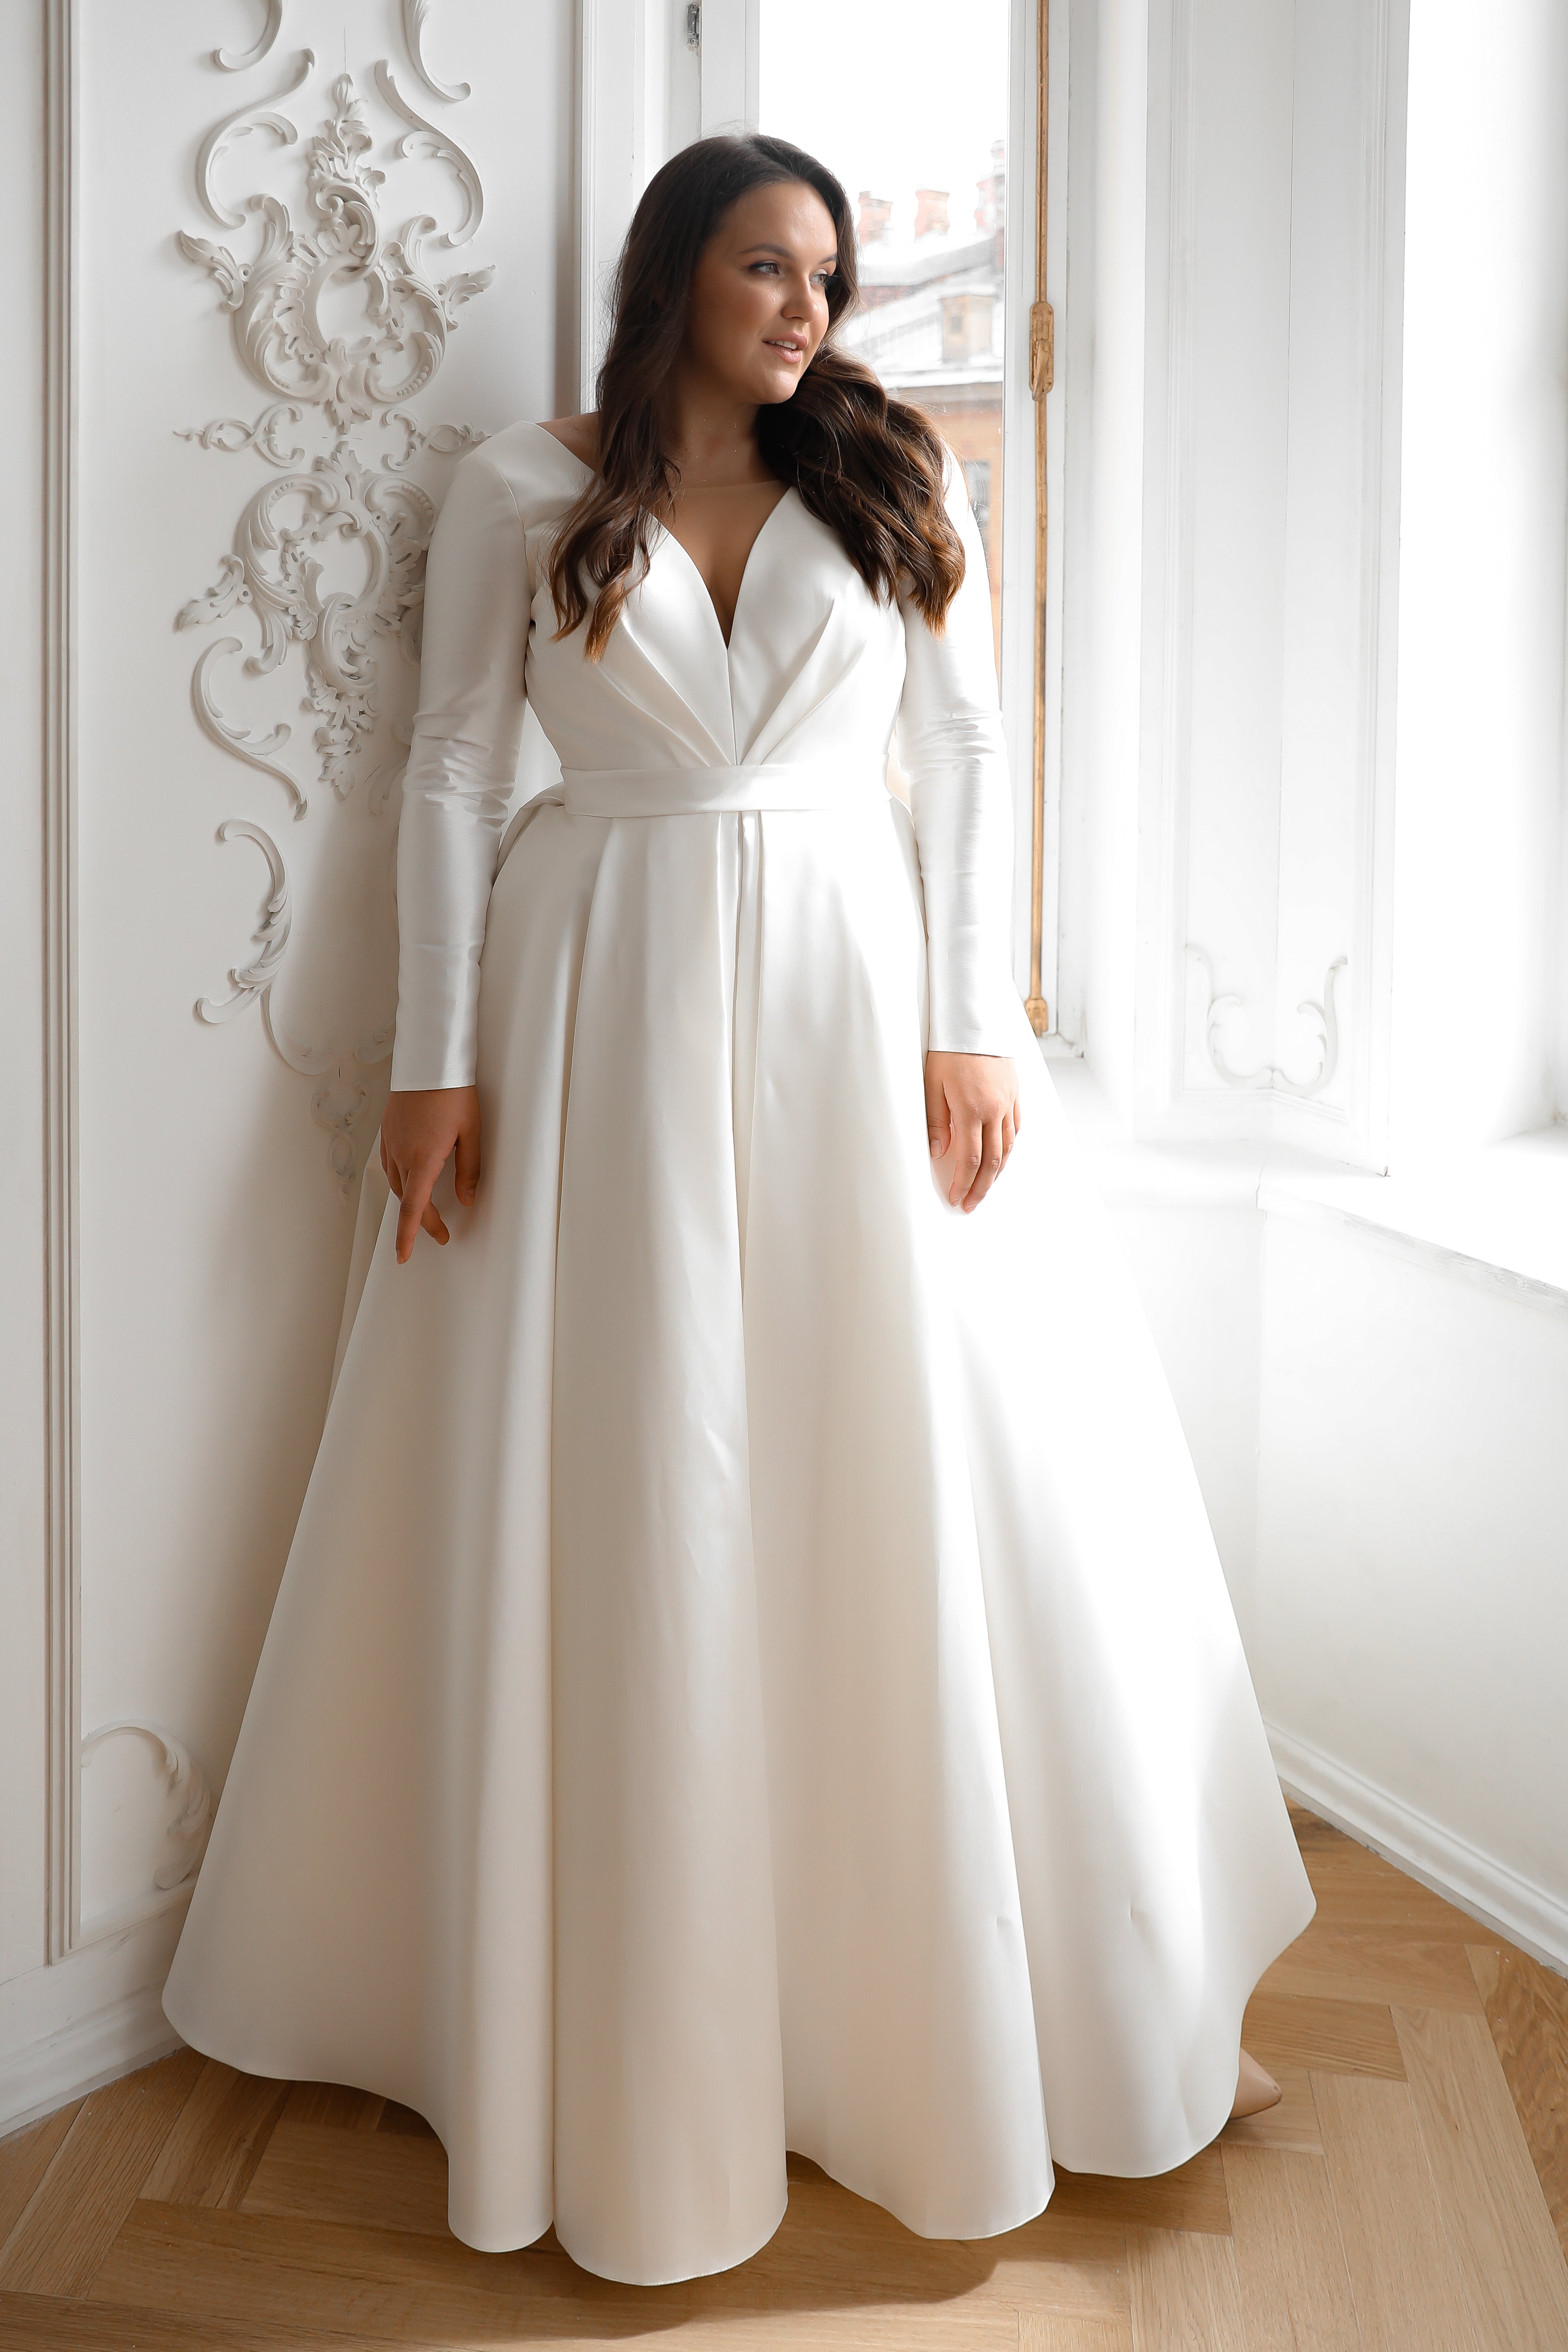 Plus Size Wedding Dresses & Bridal Gowns | Essense of Australia